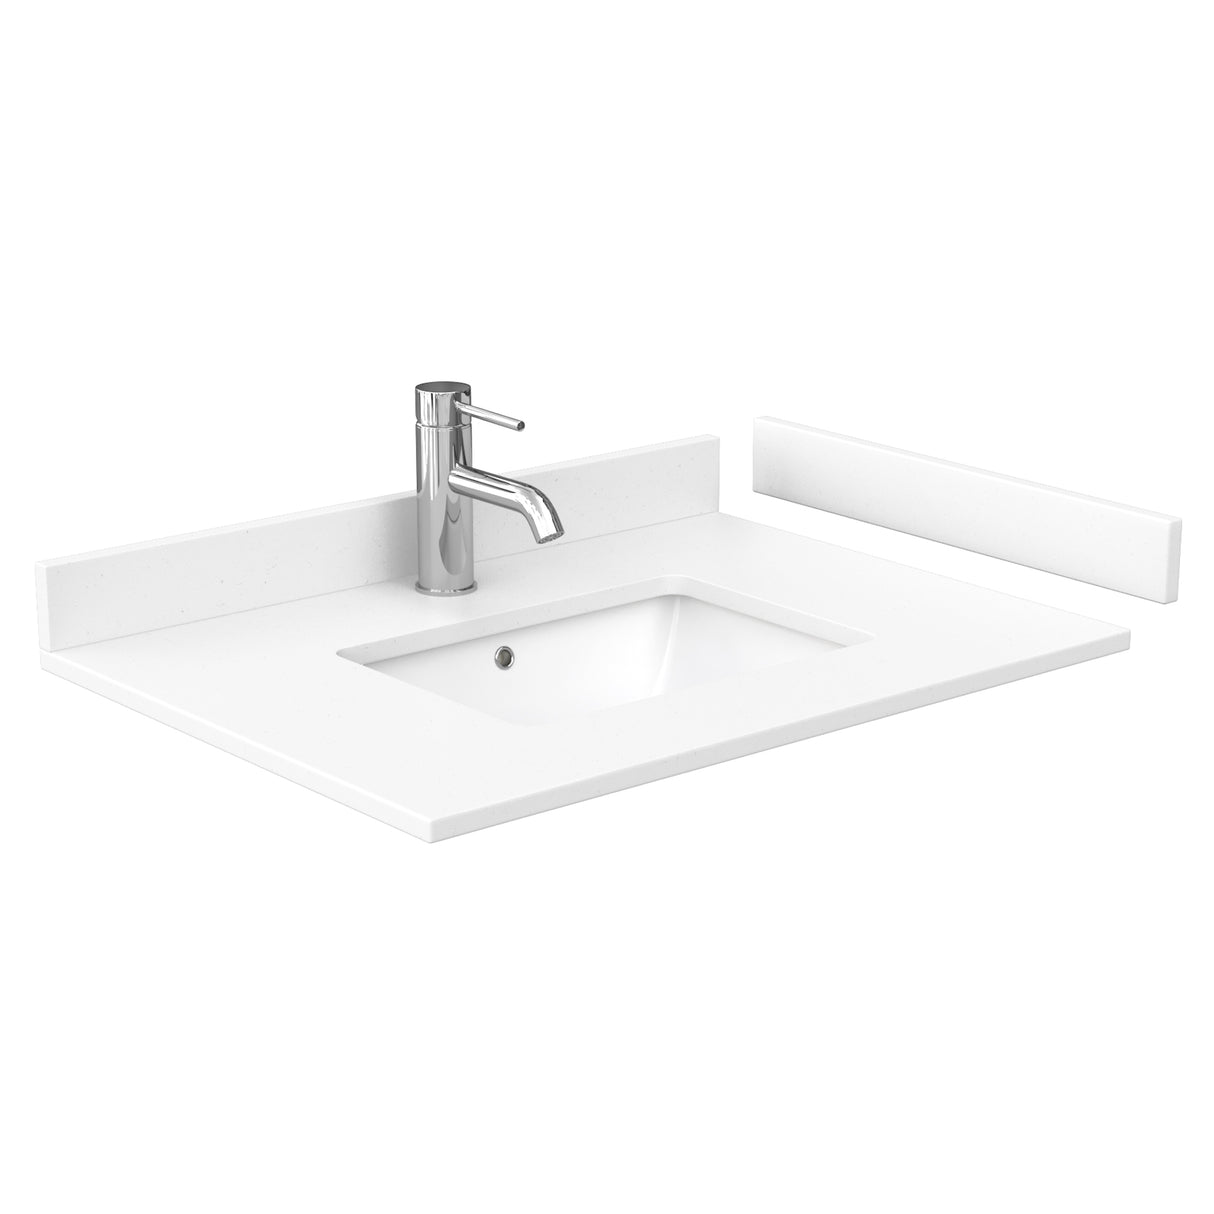 Sheffield 30 Inch Single Bathroom Vanity in Dark Gray White Cultured Marble Countertop Undermount Square Sink No Mirror